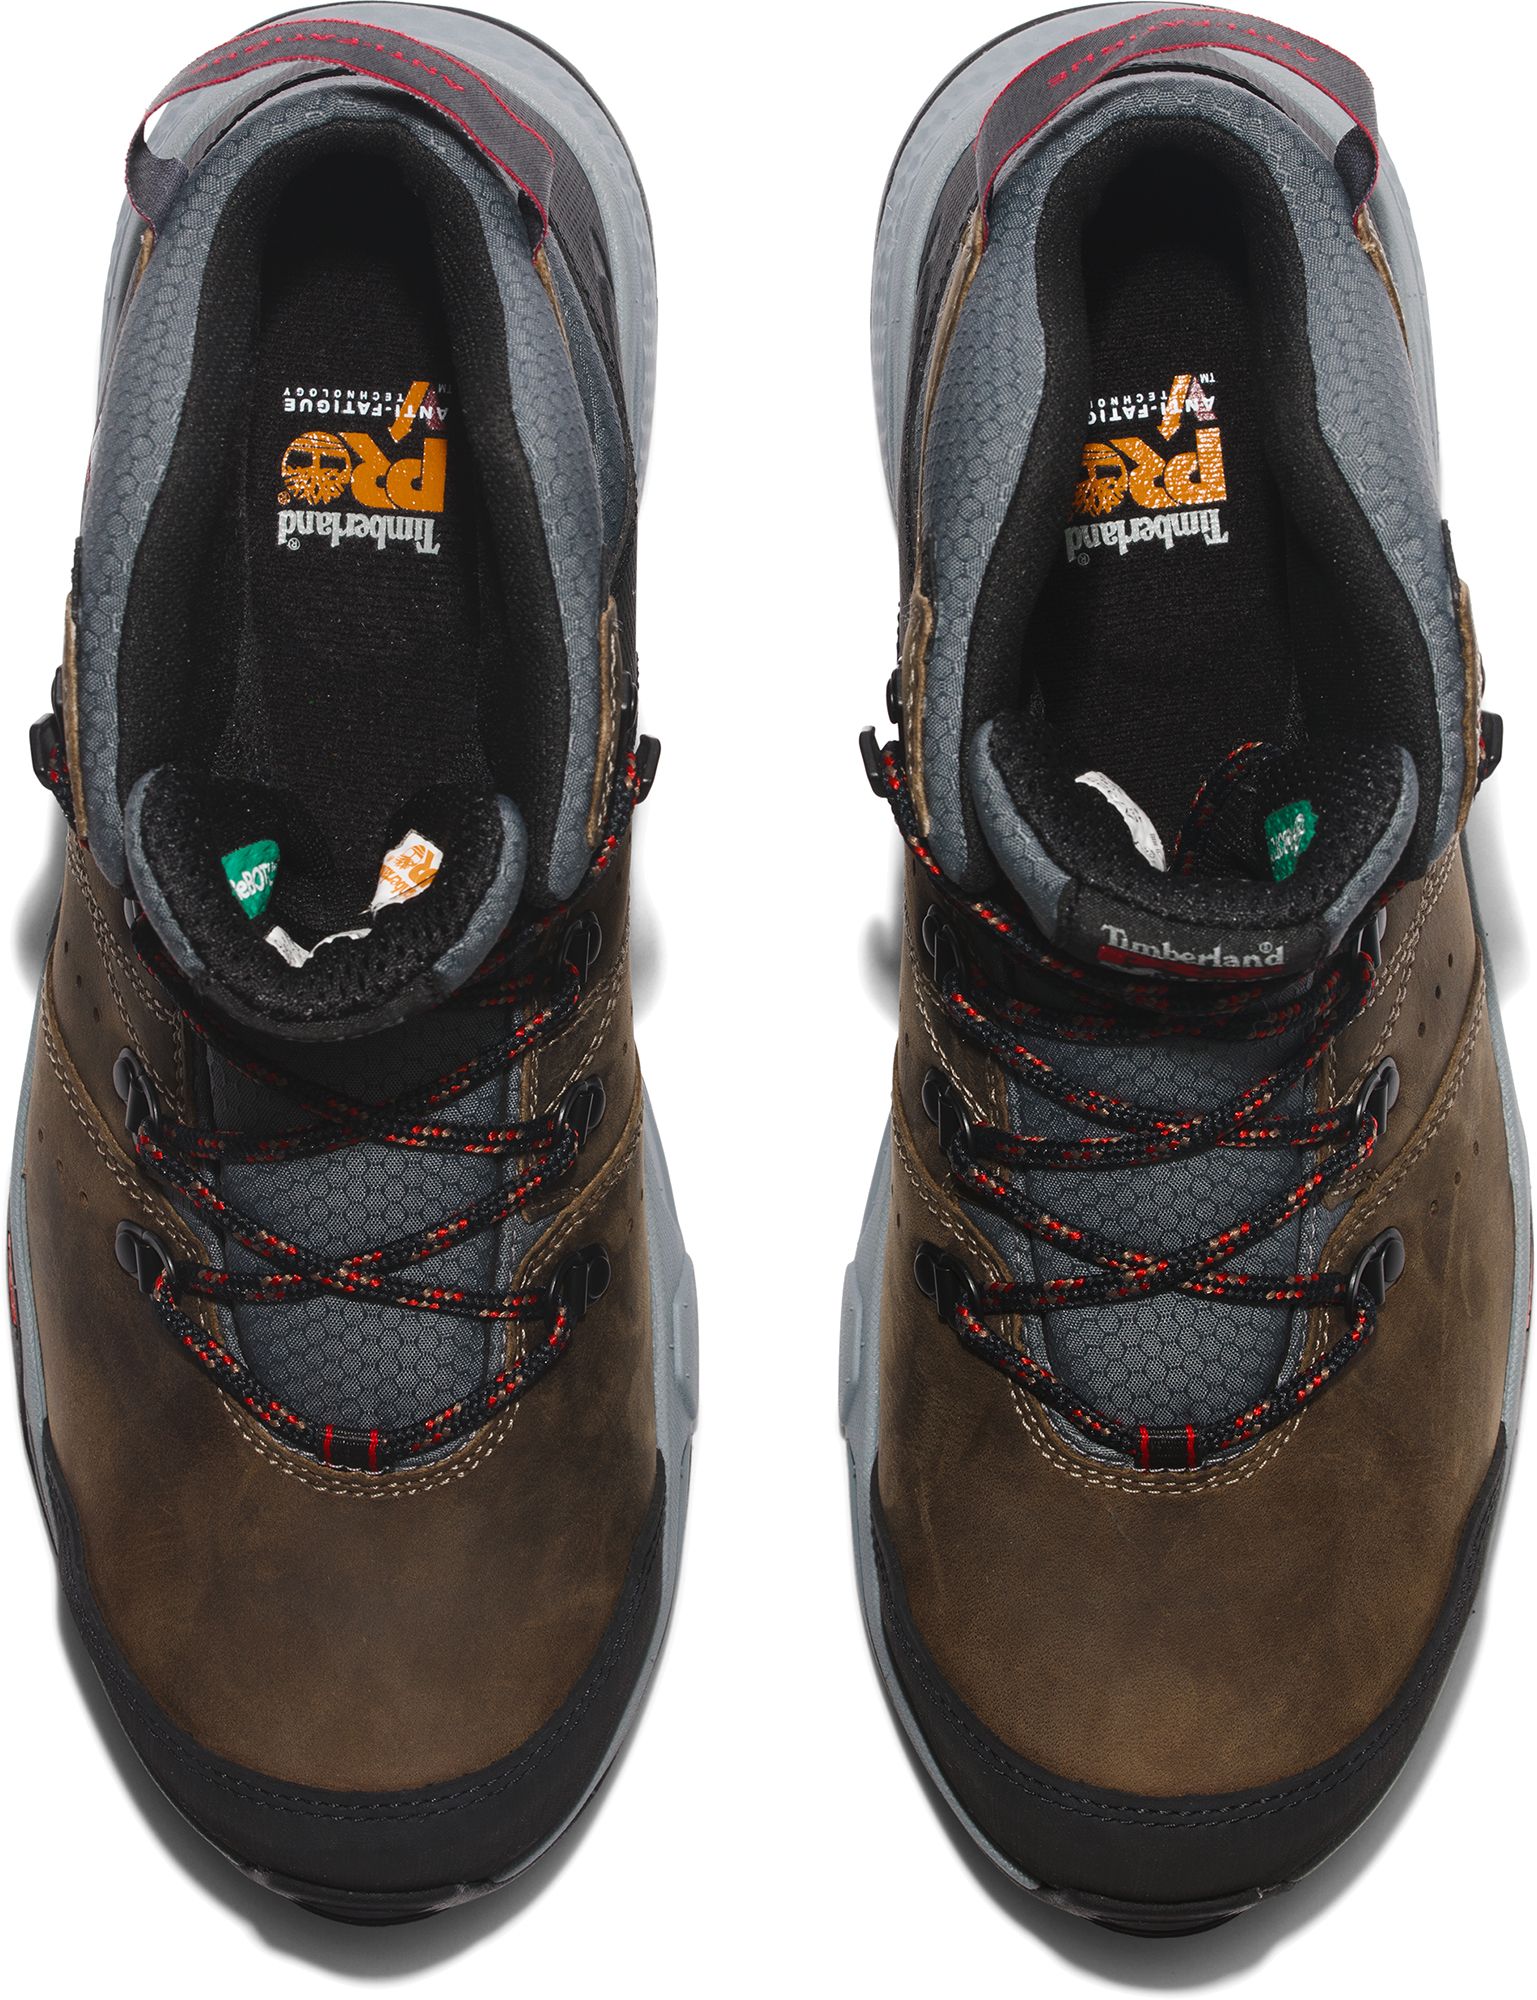 Timberland PRO Men's Switchback Waterproof Composite Toe Work Boots